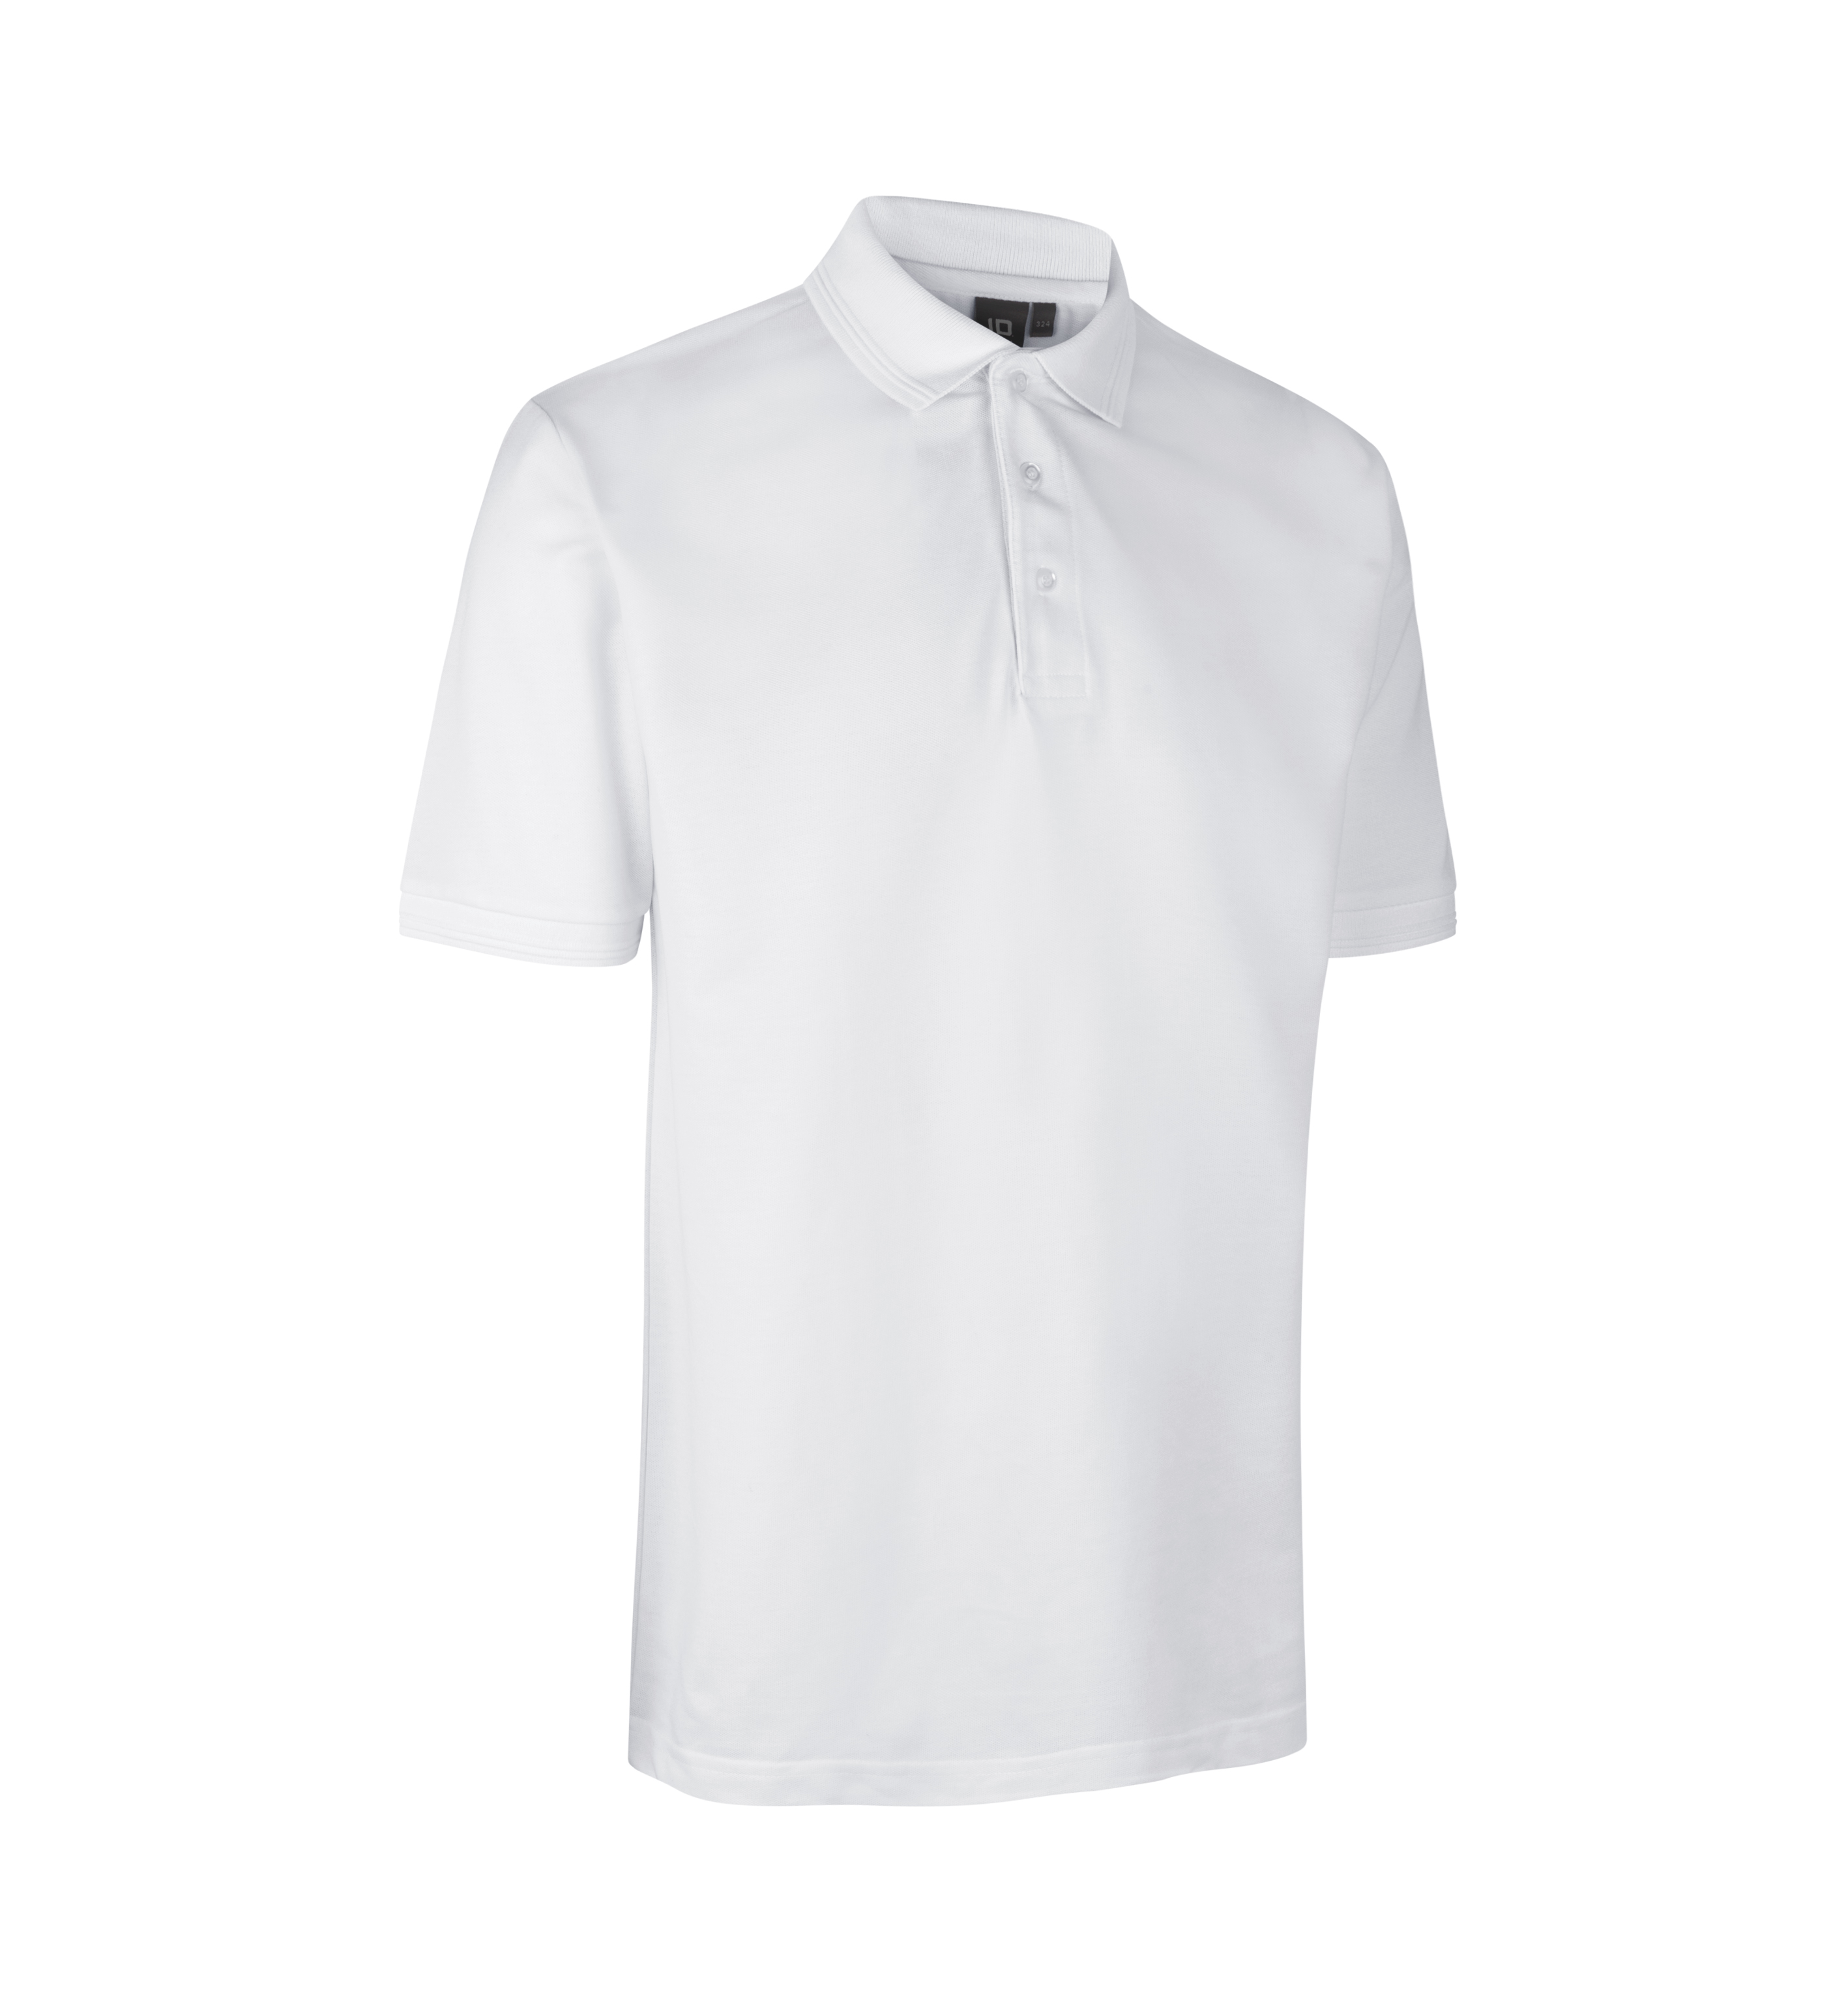 PRO Wear polo shirt | no pocket